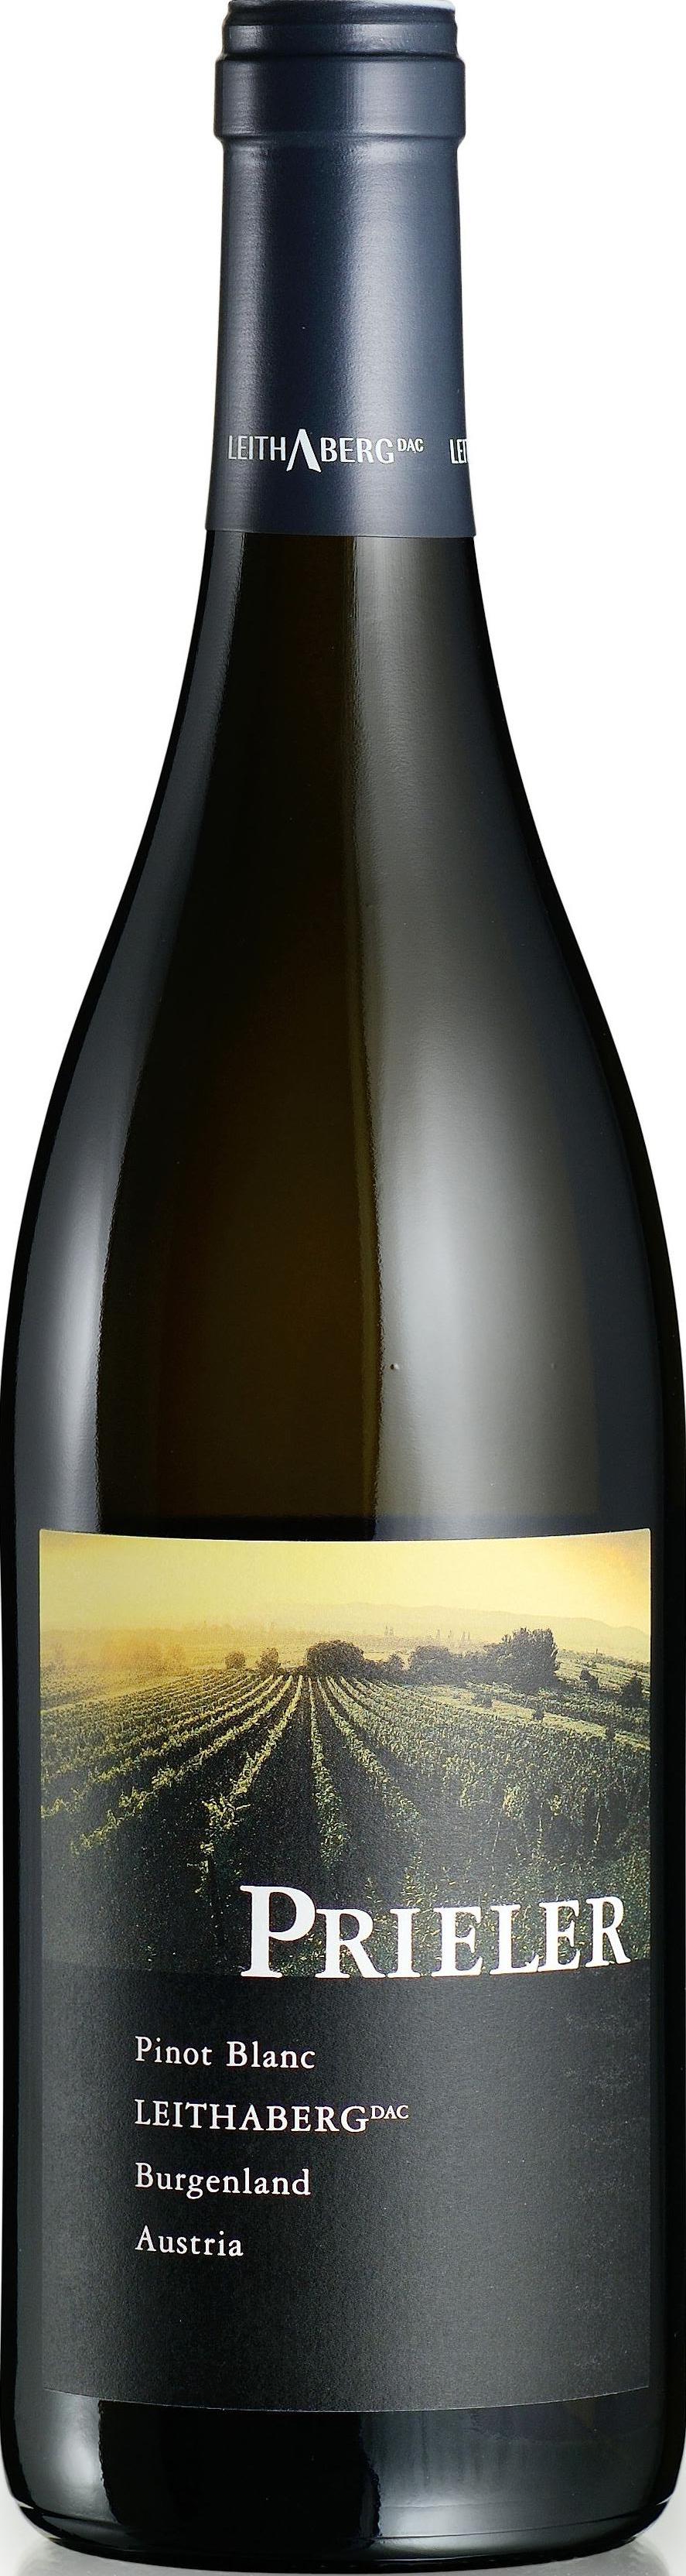 Prieler Leithaberg Pinot Blanc, Prieler 2020